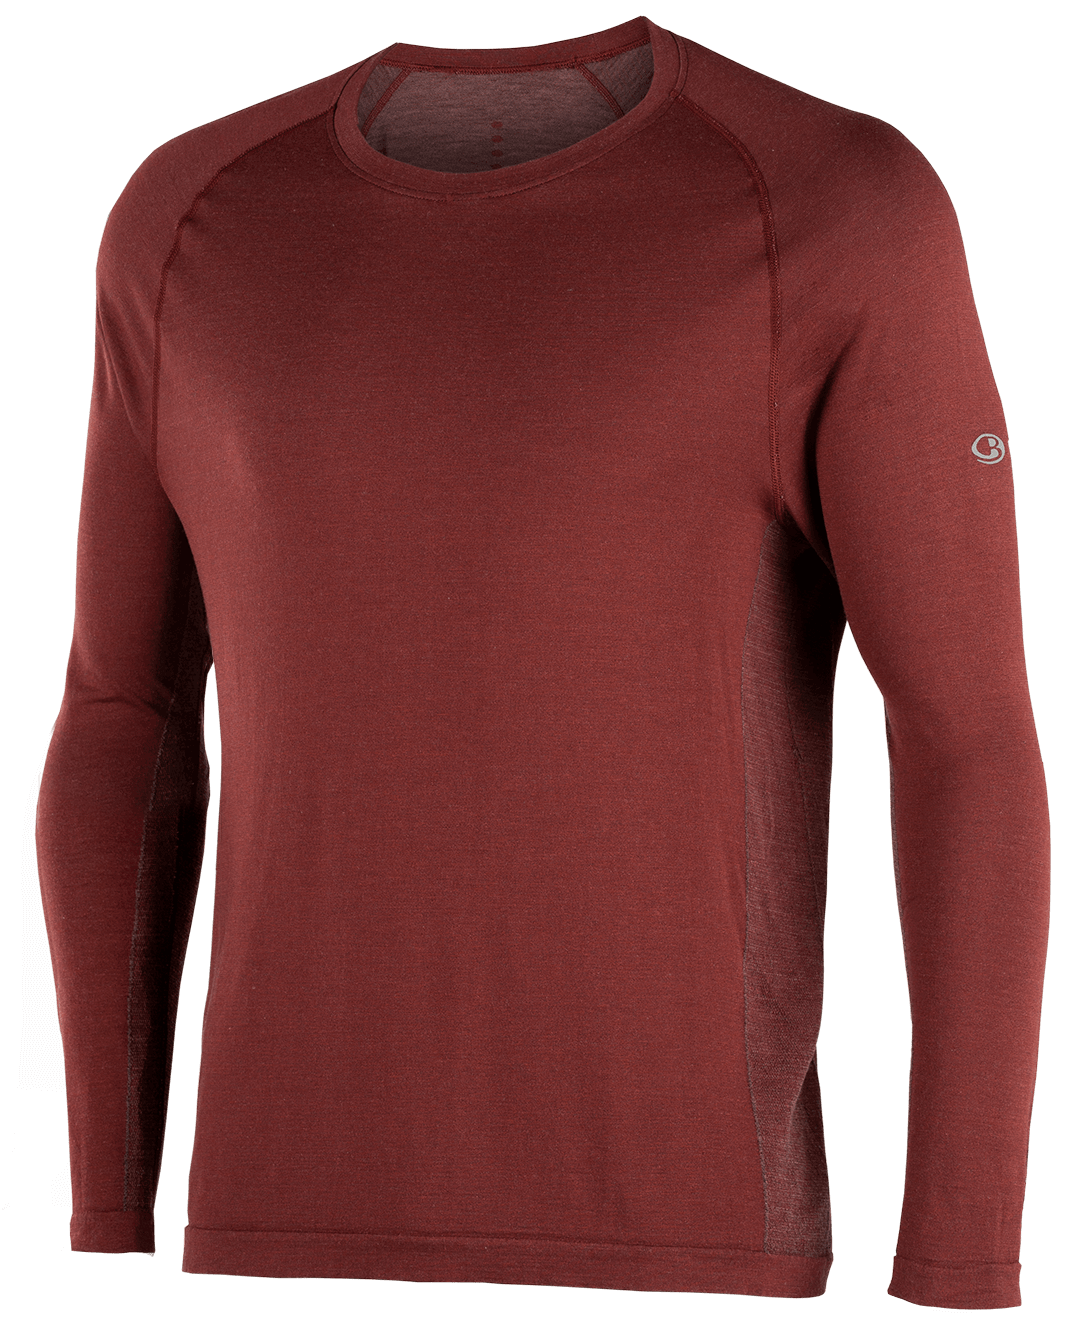 Men's Cool-Lite™ Merino Seamless Long Sleeve Crewe T-Shirt in Port Royale. 